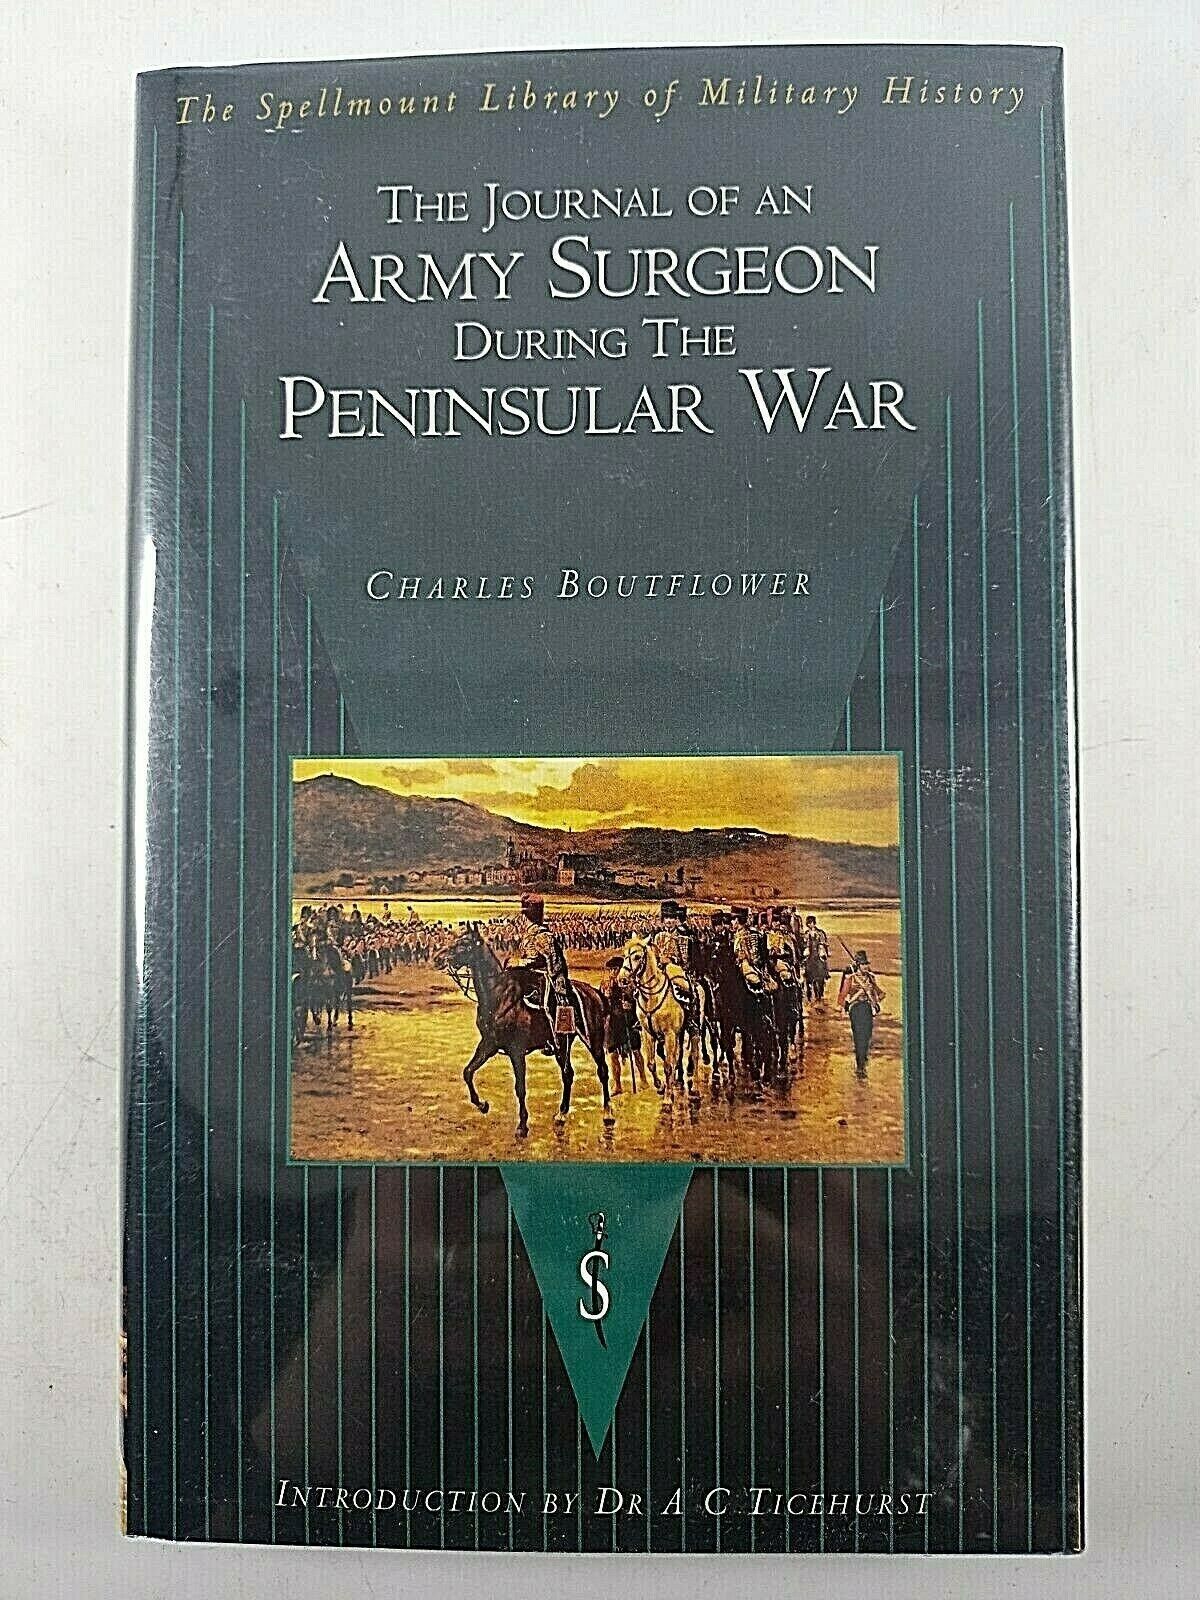 British Napoleonic Journal of Army Surgeon During Peninsular War Reference Book